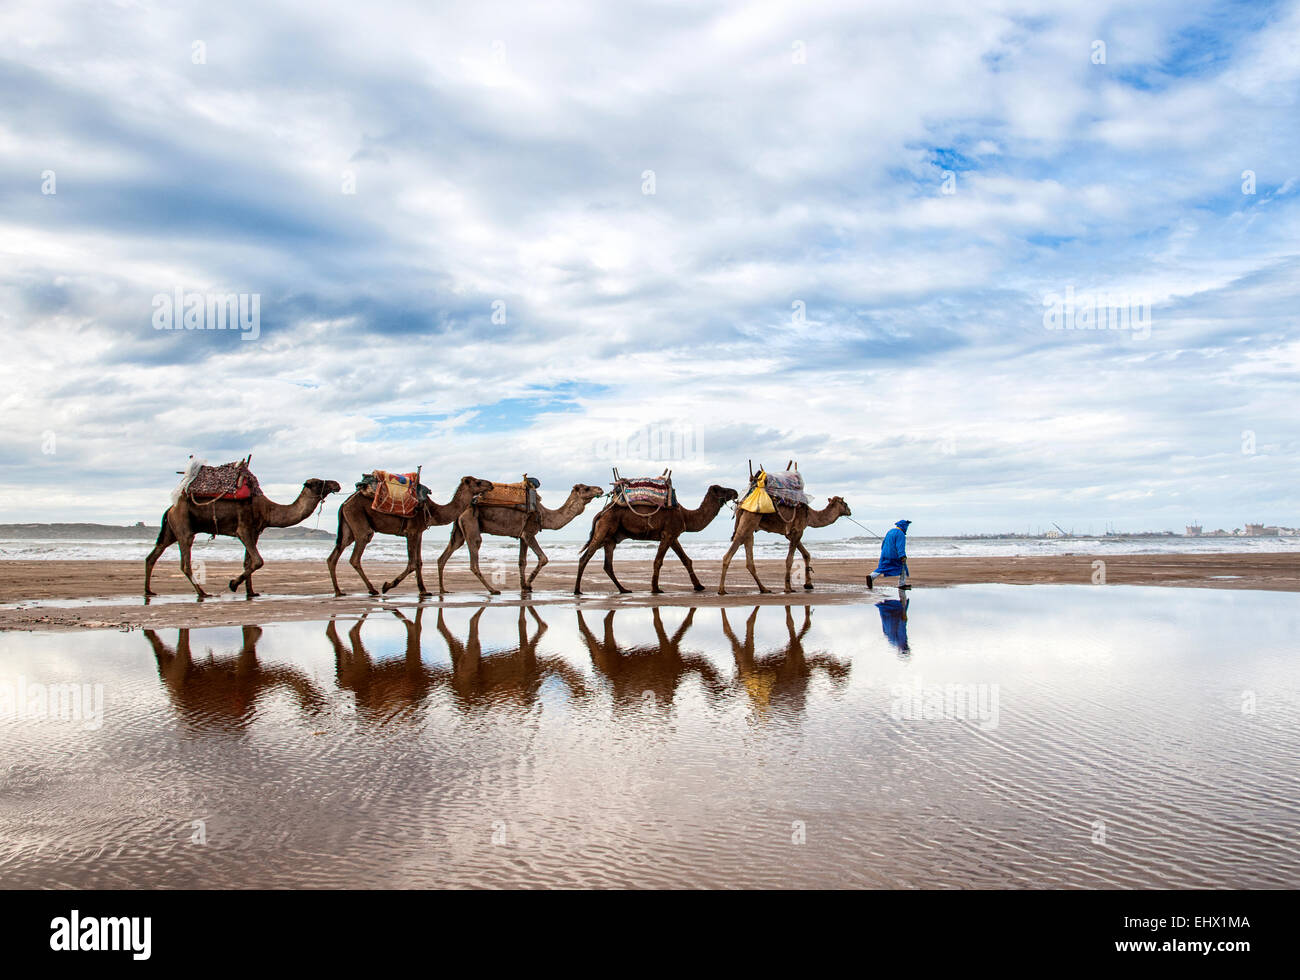 Berber man leading camel train on the beach, Essaouira, Morocco Stock Photo